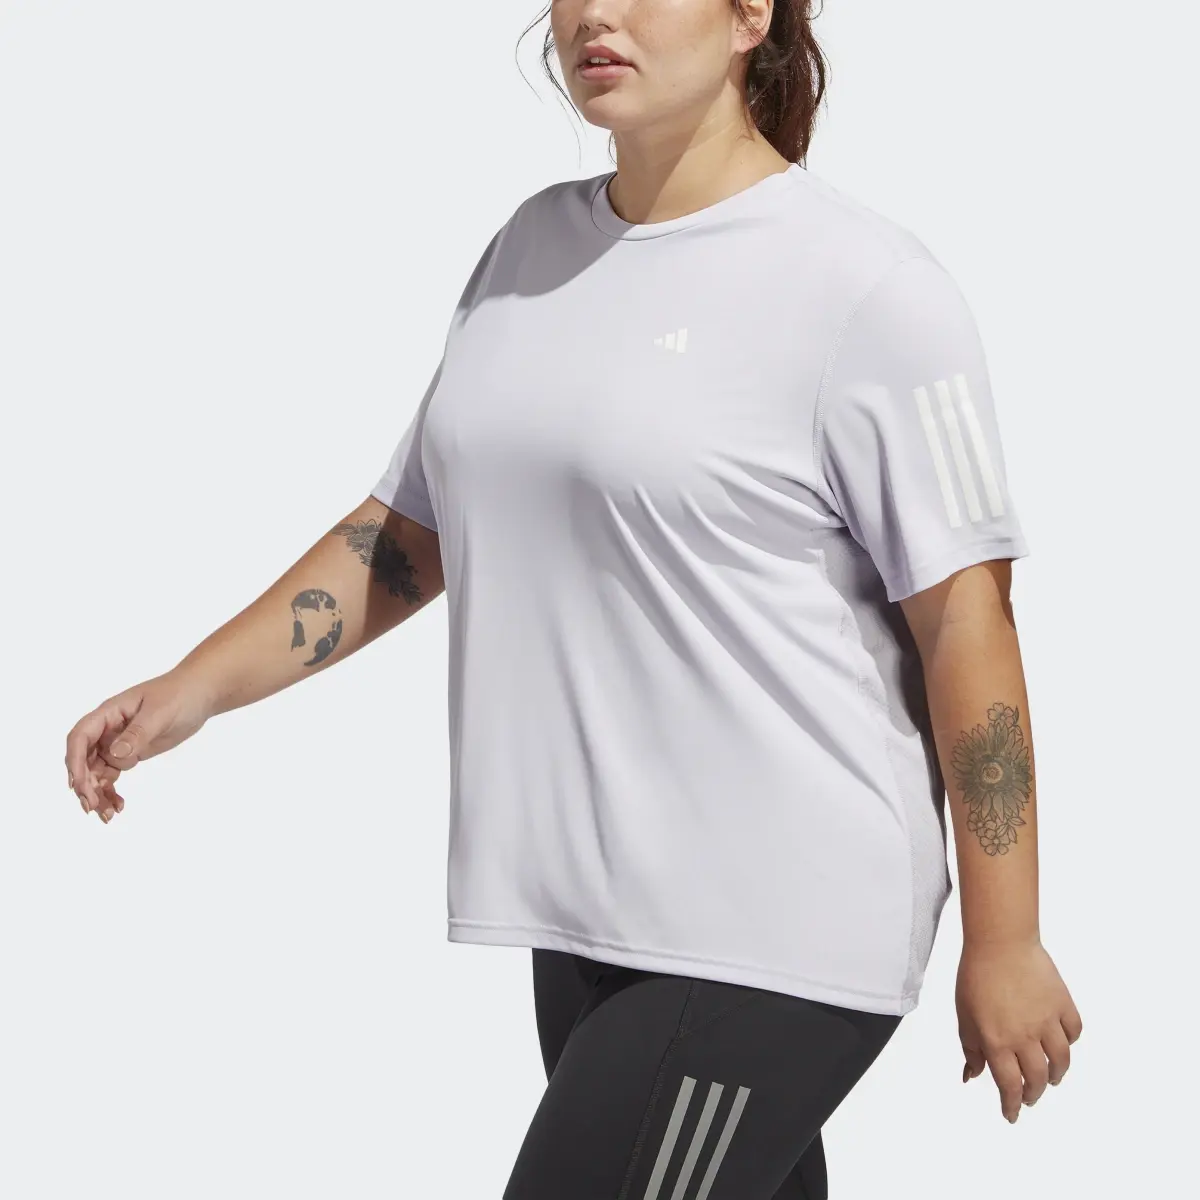 Adidas Own the Run T-Shirt (Plus Size). 1